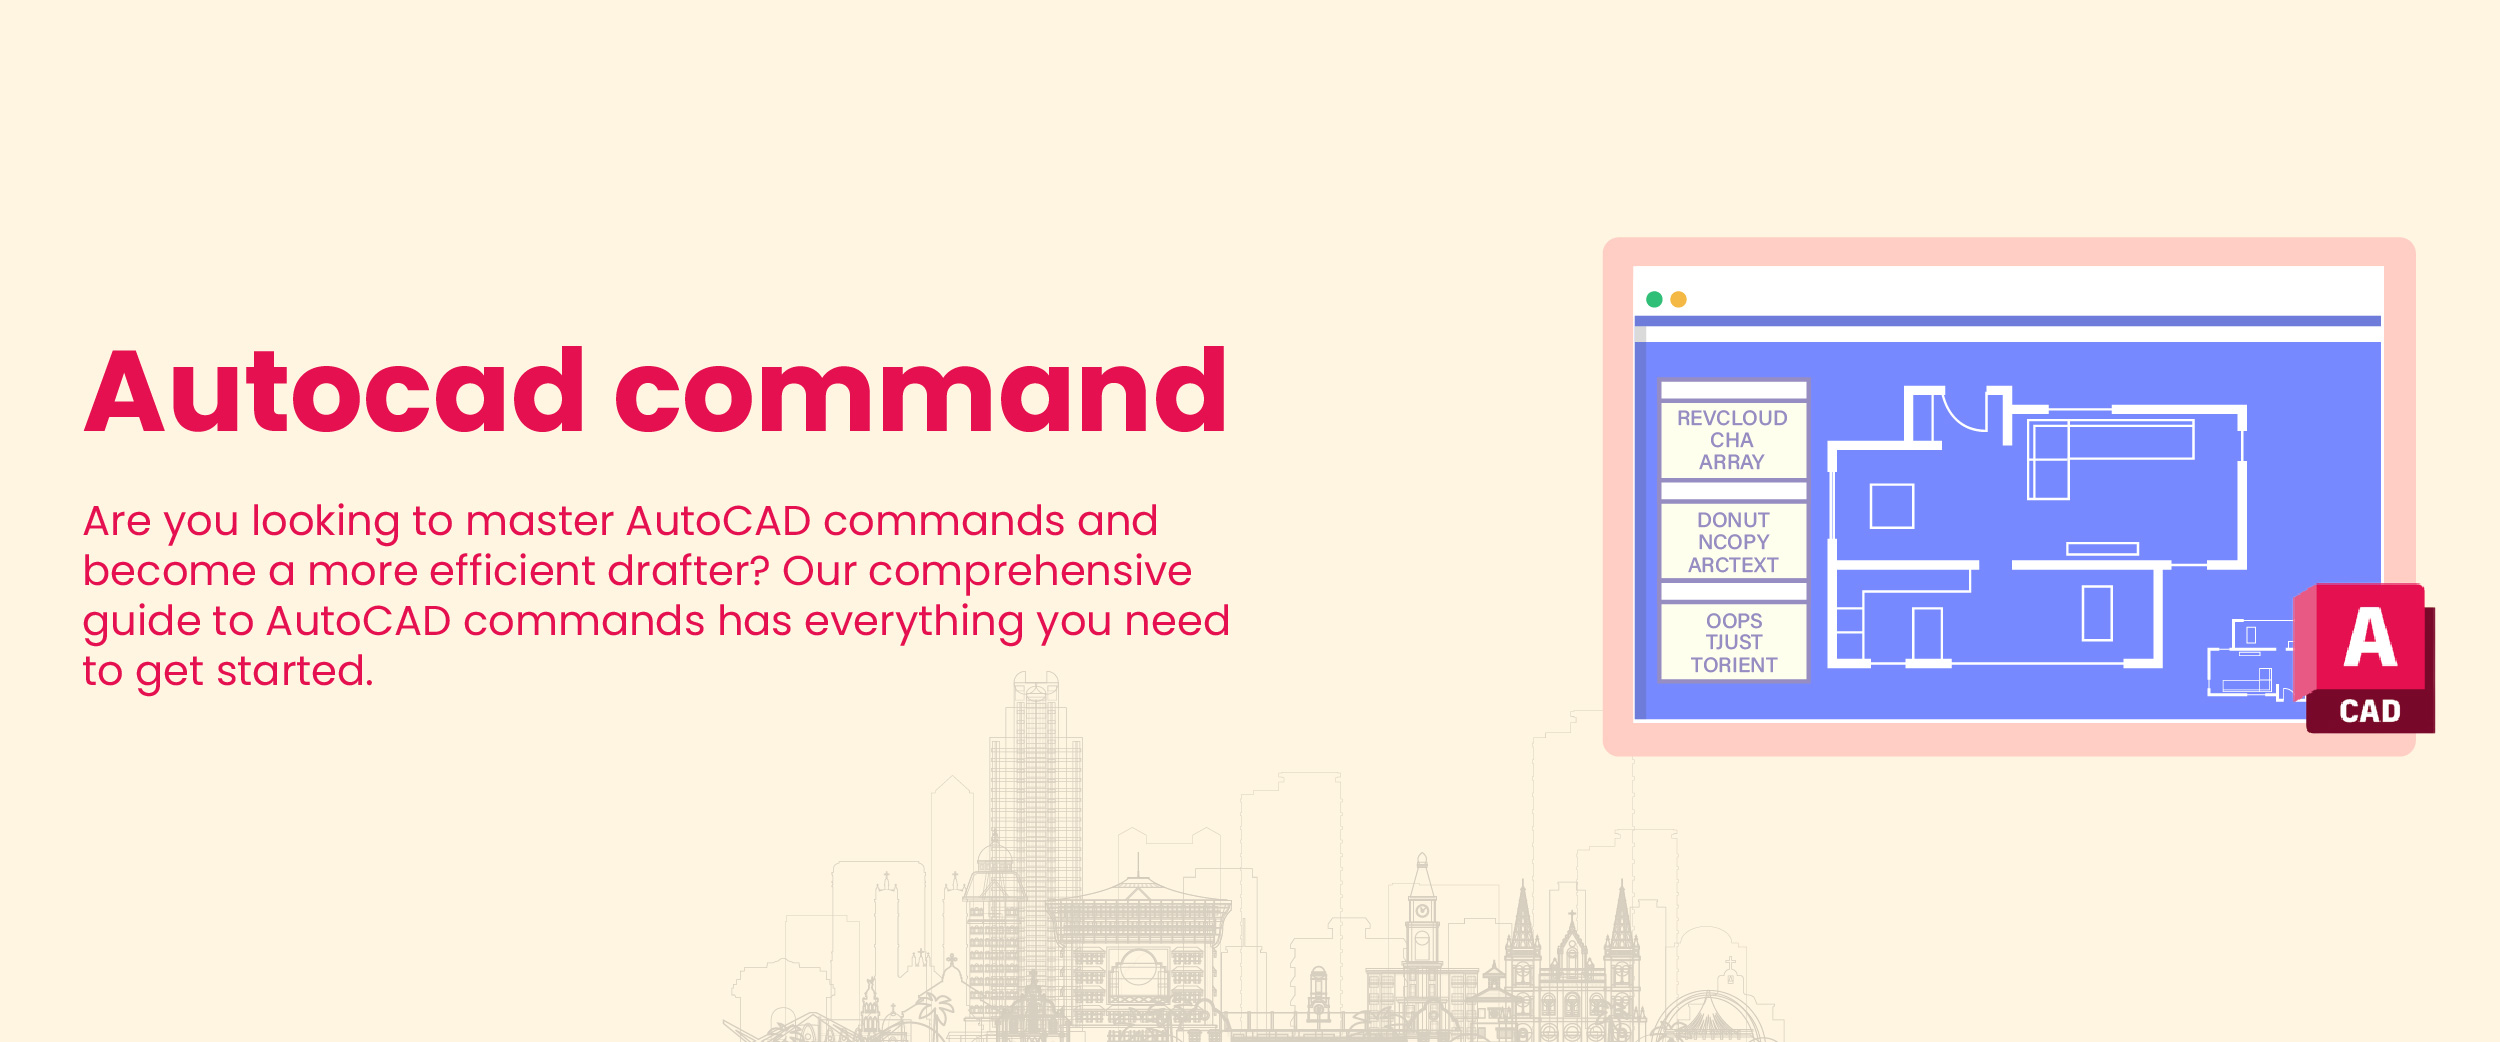 AutoCAD commands